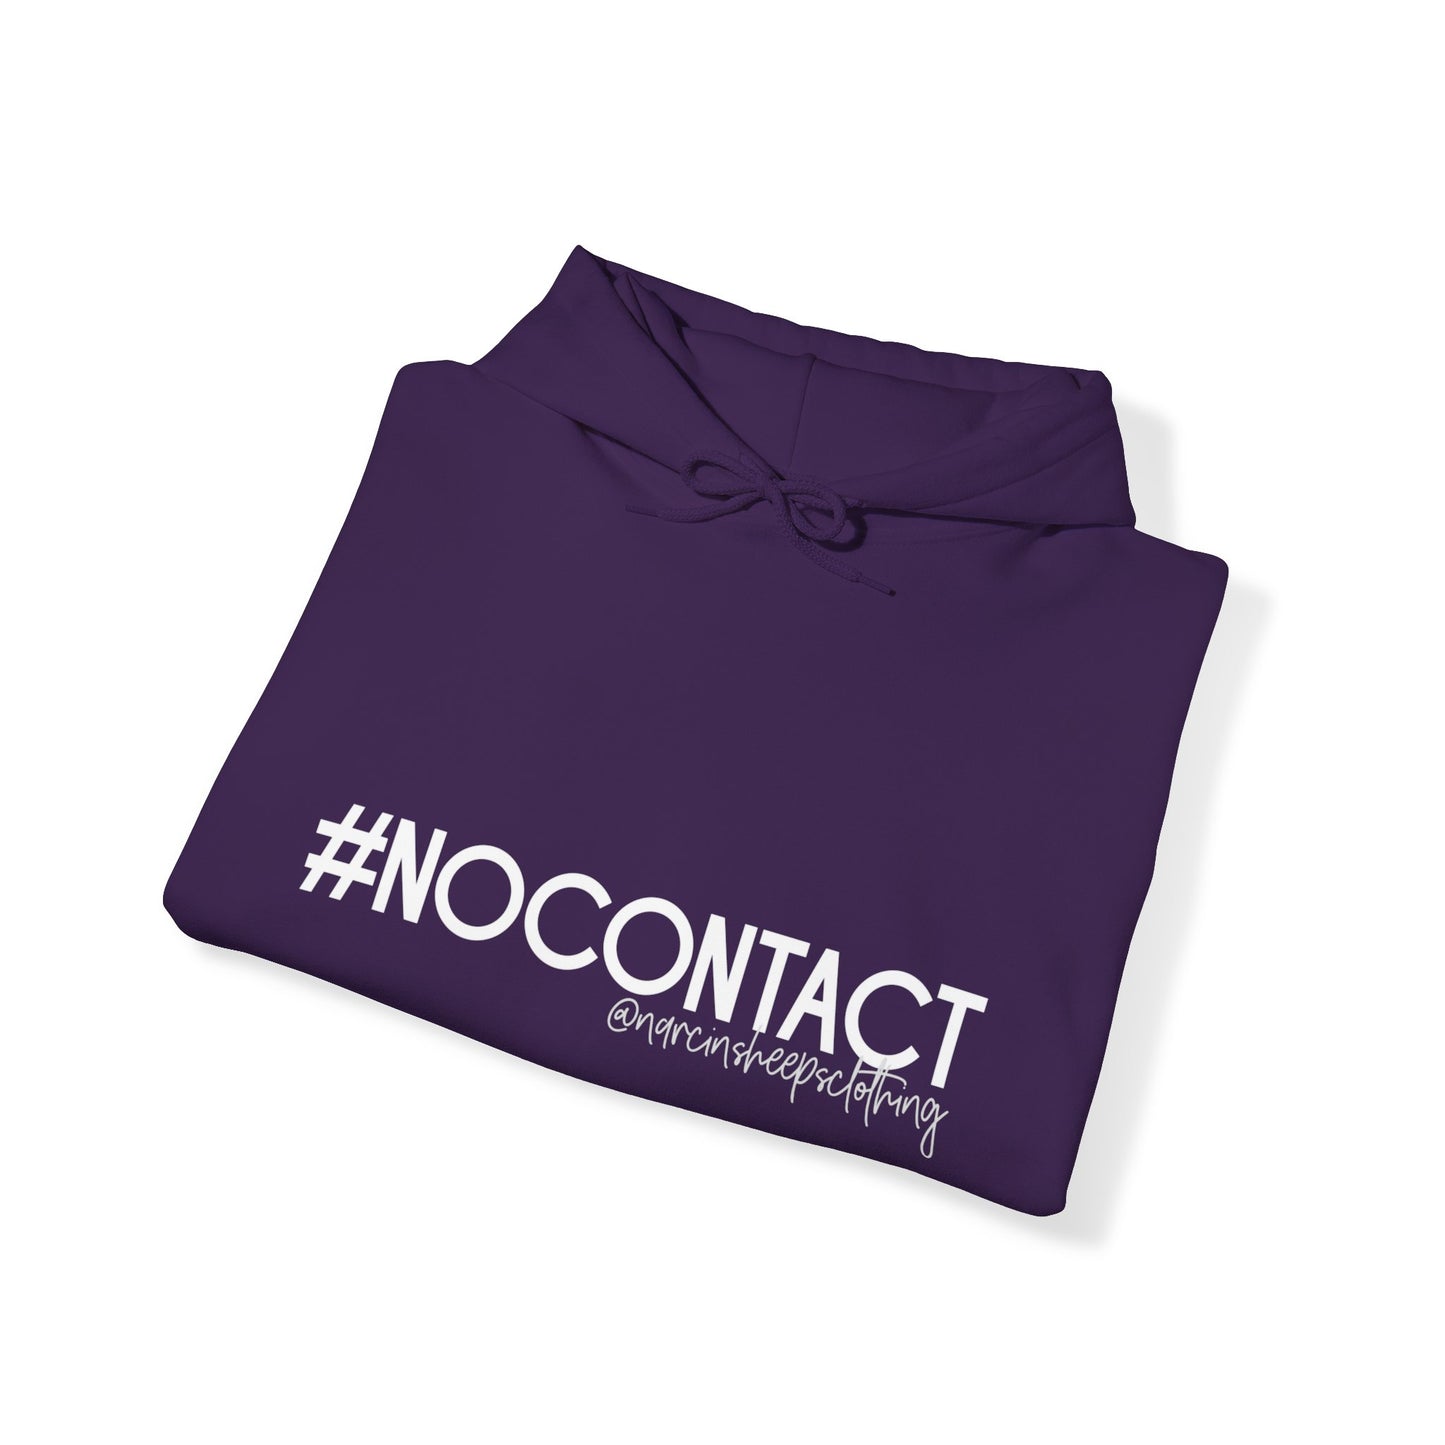 No Contact Heavy Blend™ Hooded Sweatshirt